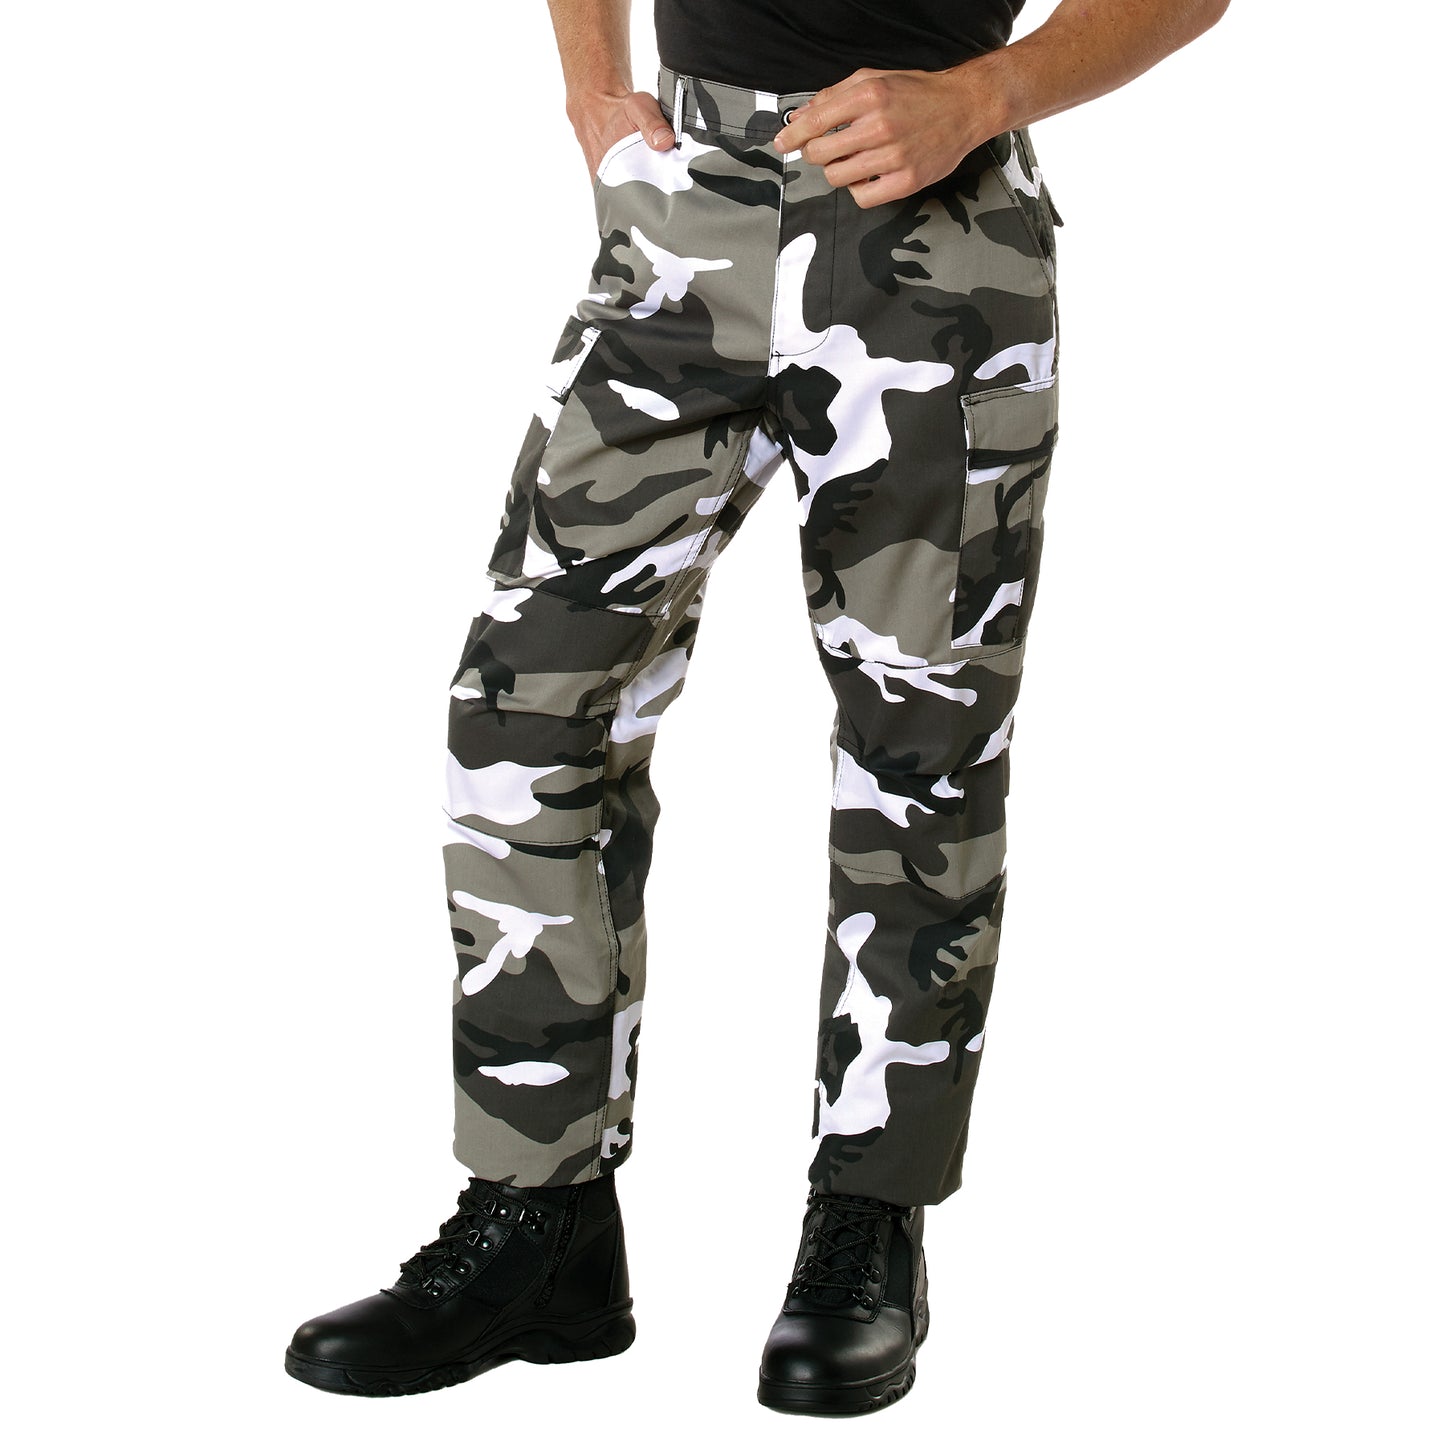 Rothco City Camo Tactical BDU Pants